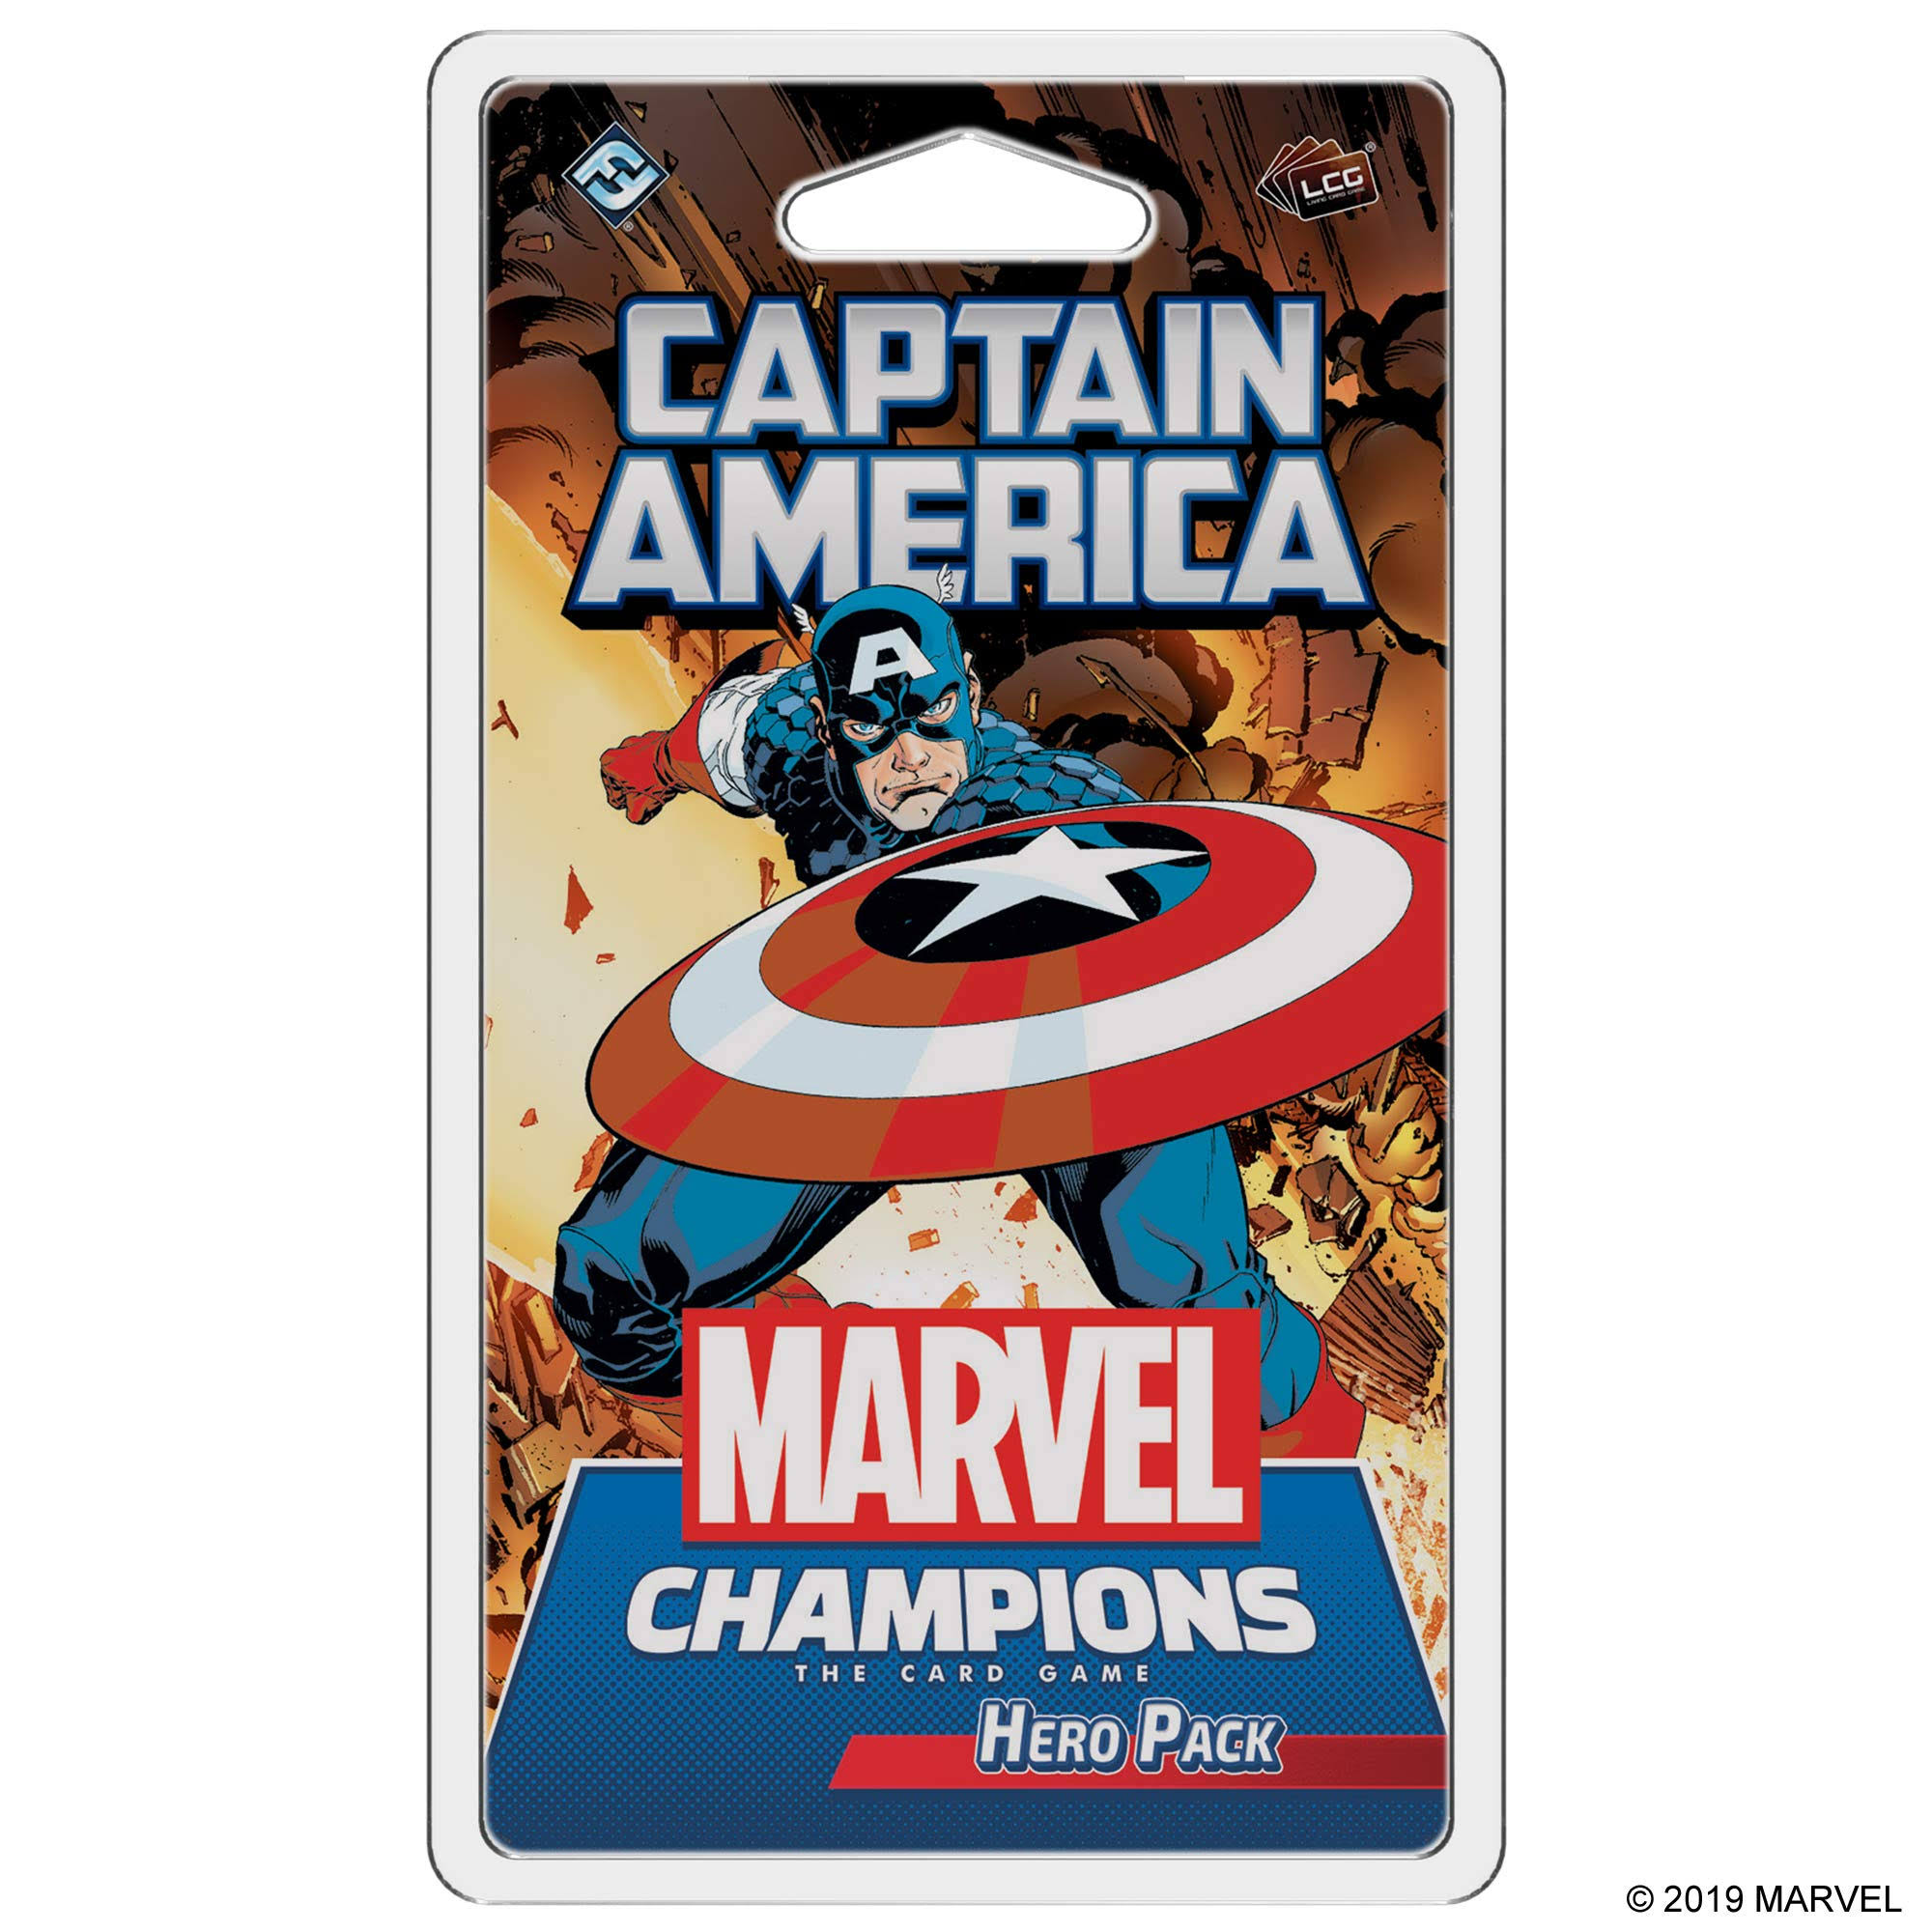 CAPTAIN AMERICA HERO PACK - Marvel CHAMPIONS CARD GAME